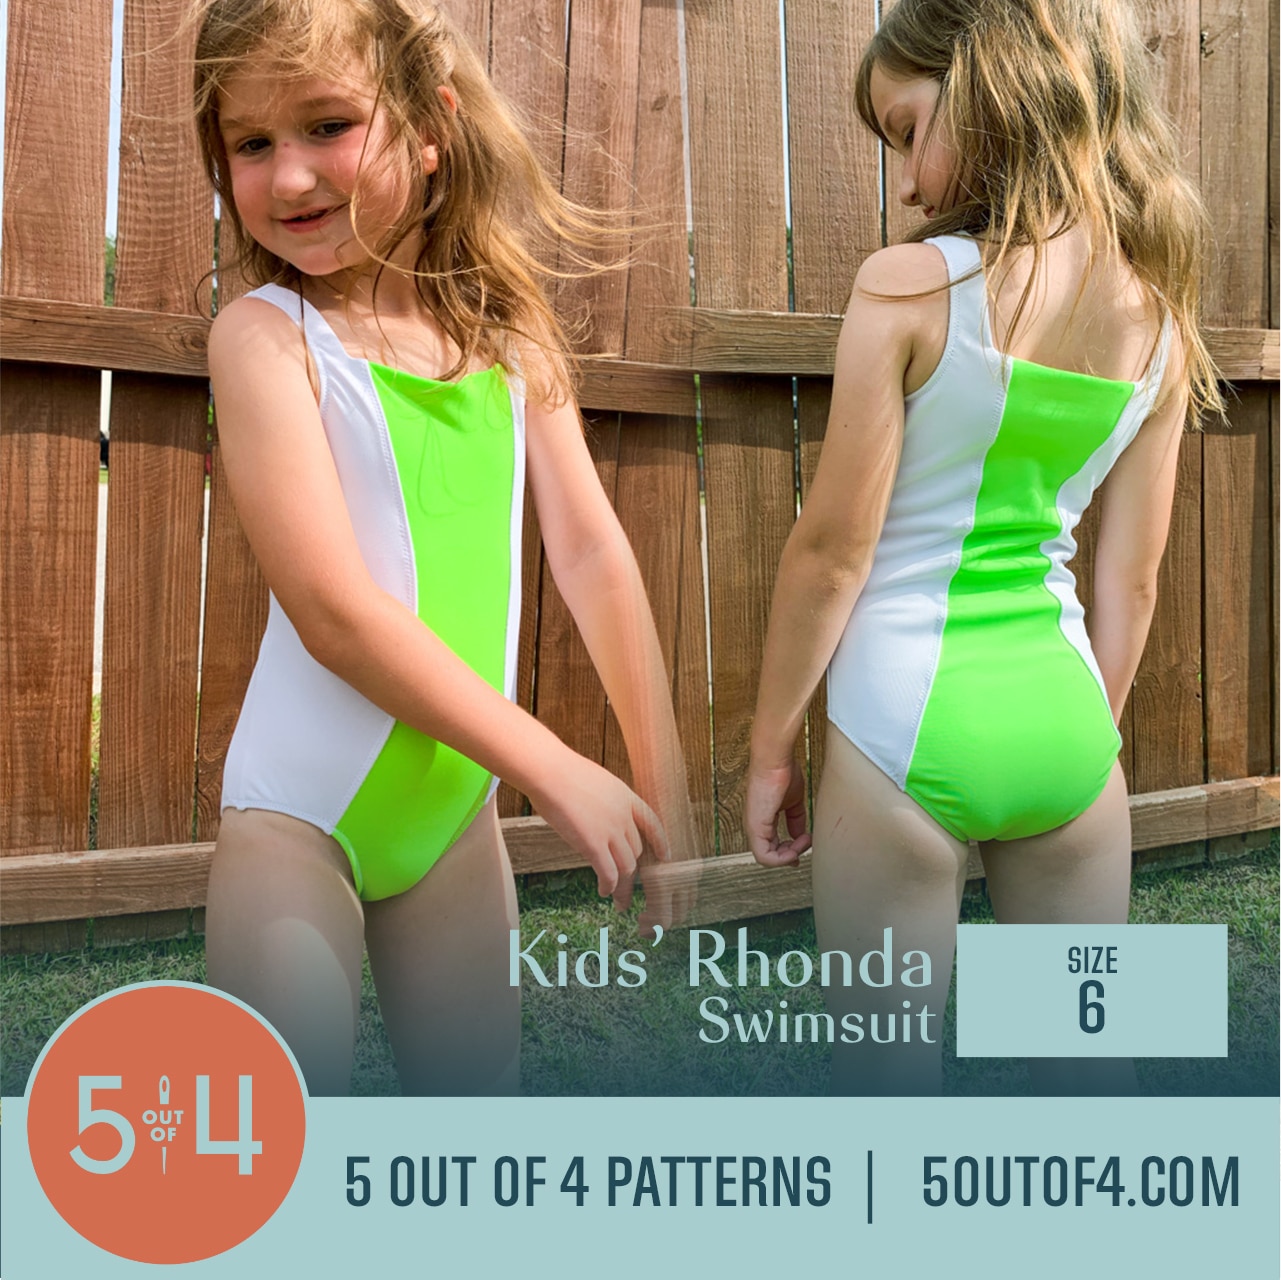 https://5outof4.com/wp-content/uploads/2021/06/Kids-Rhonda-Swimsuit-Size-6.jpg